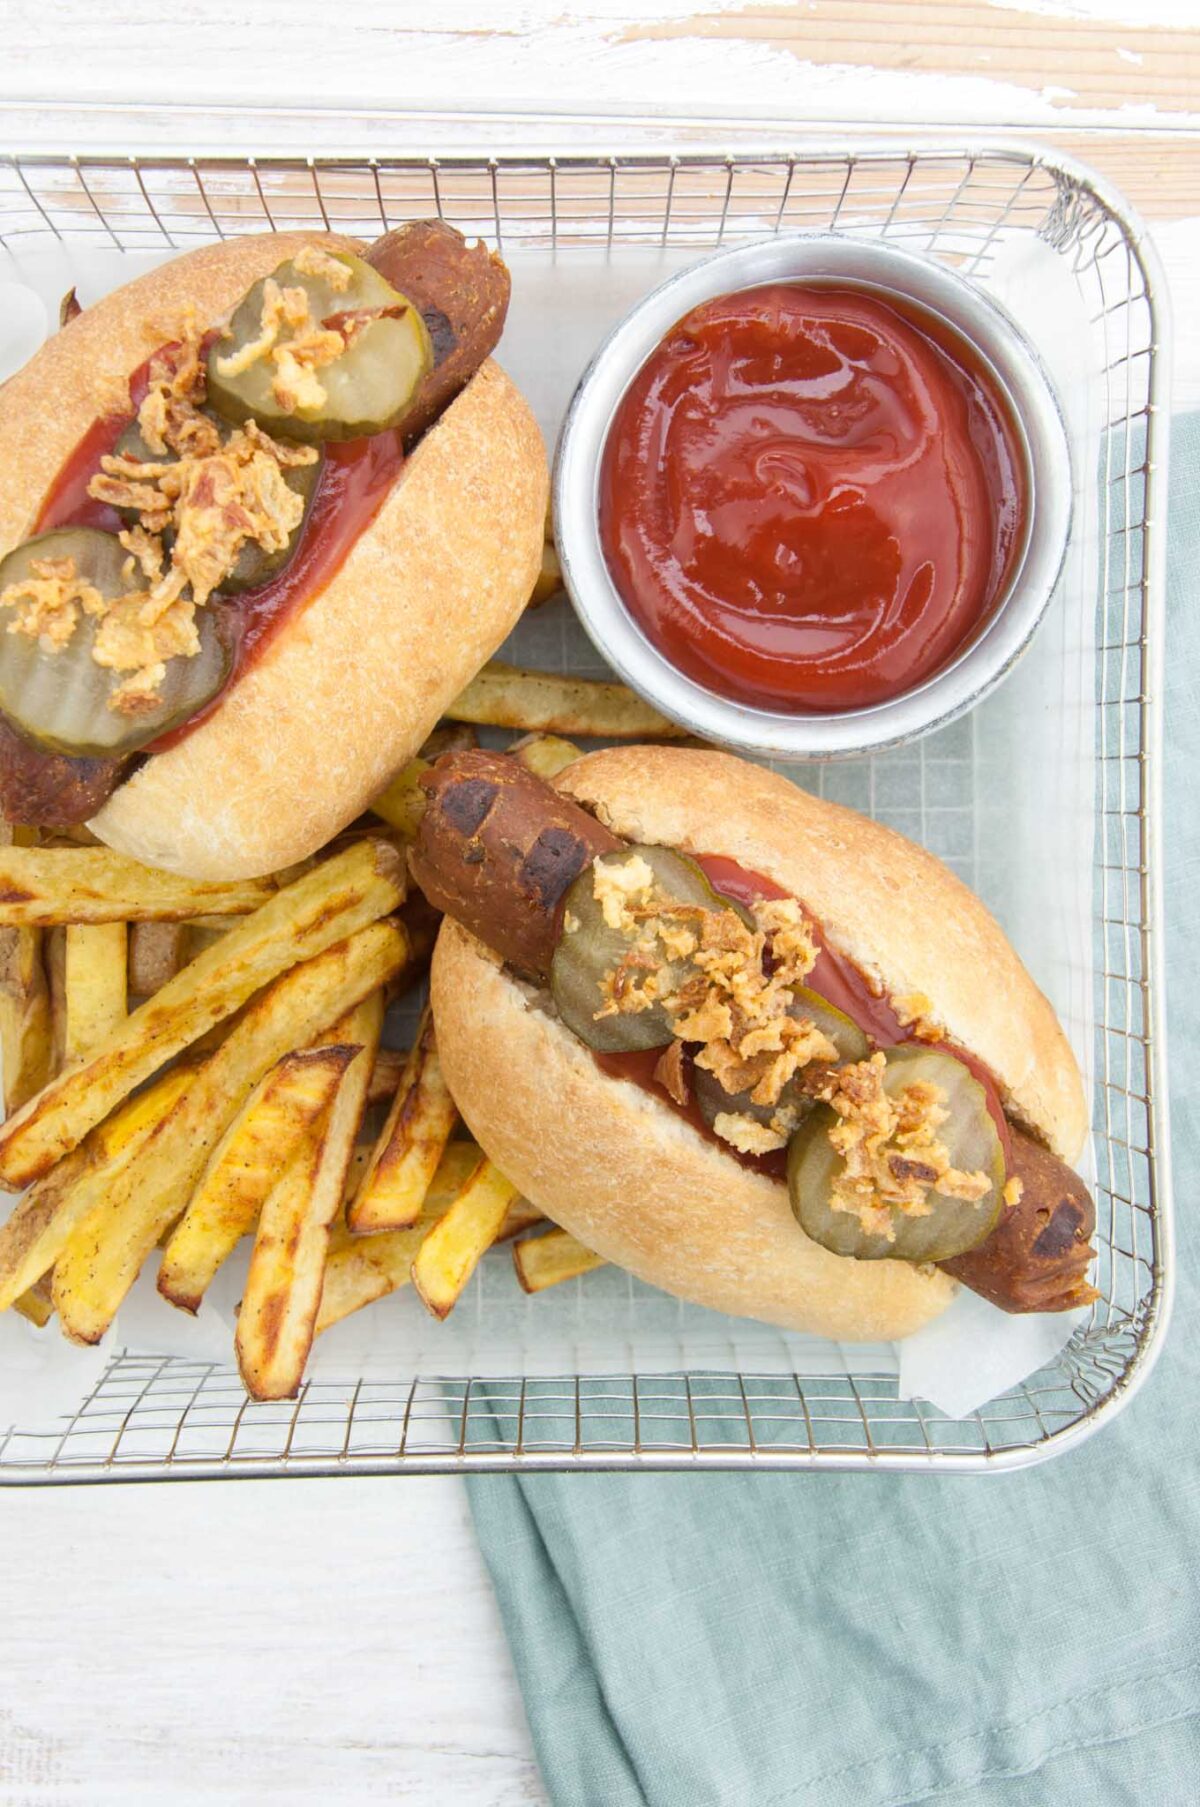 Vegan Hot Dogs with Homemade Seitan Sausages